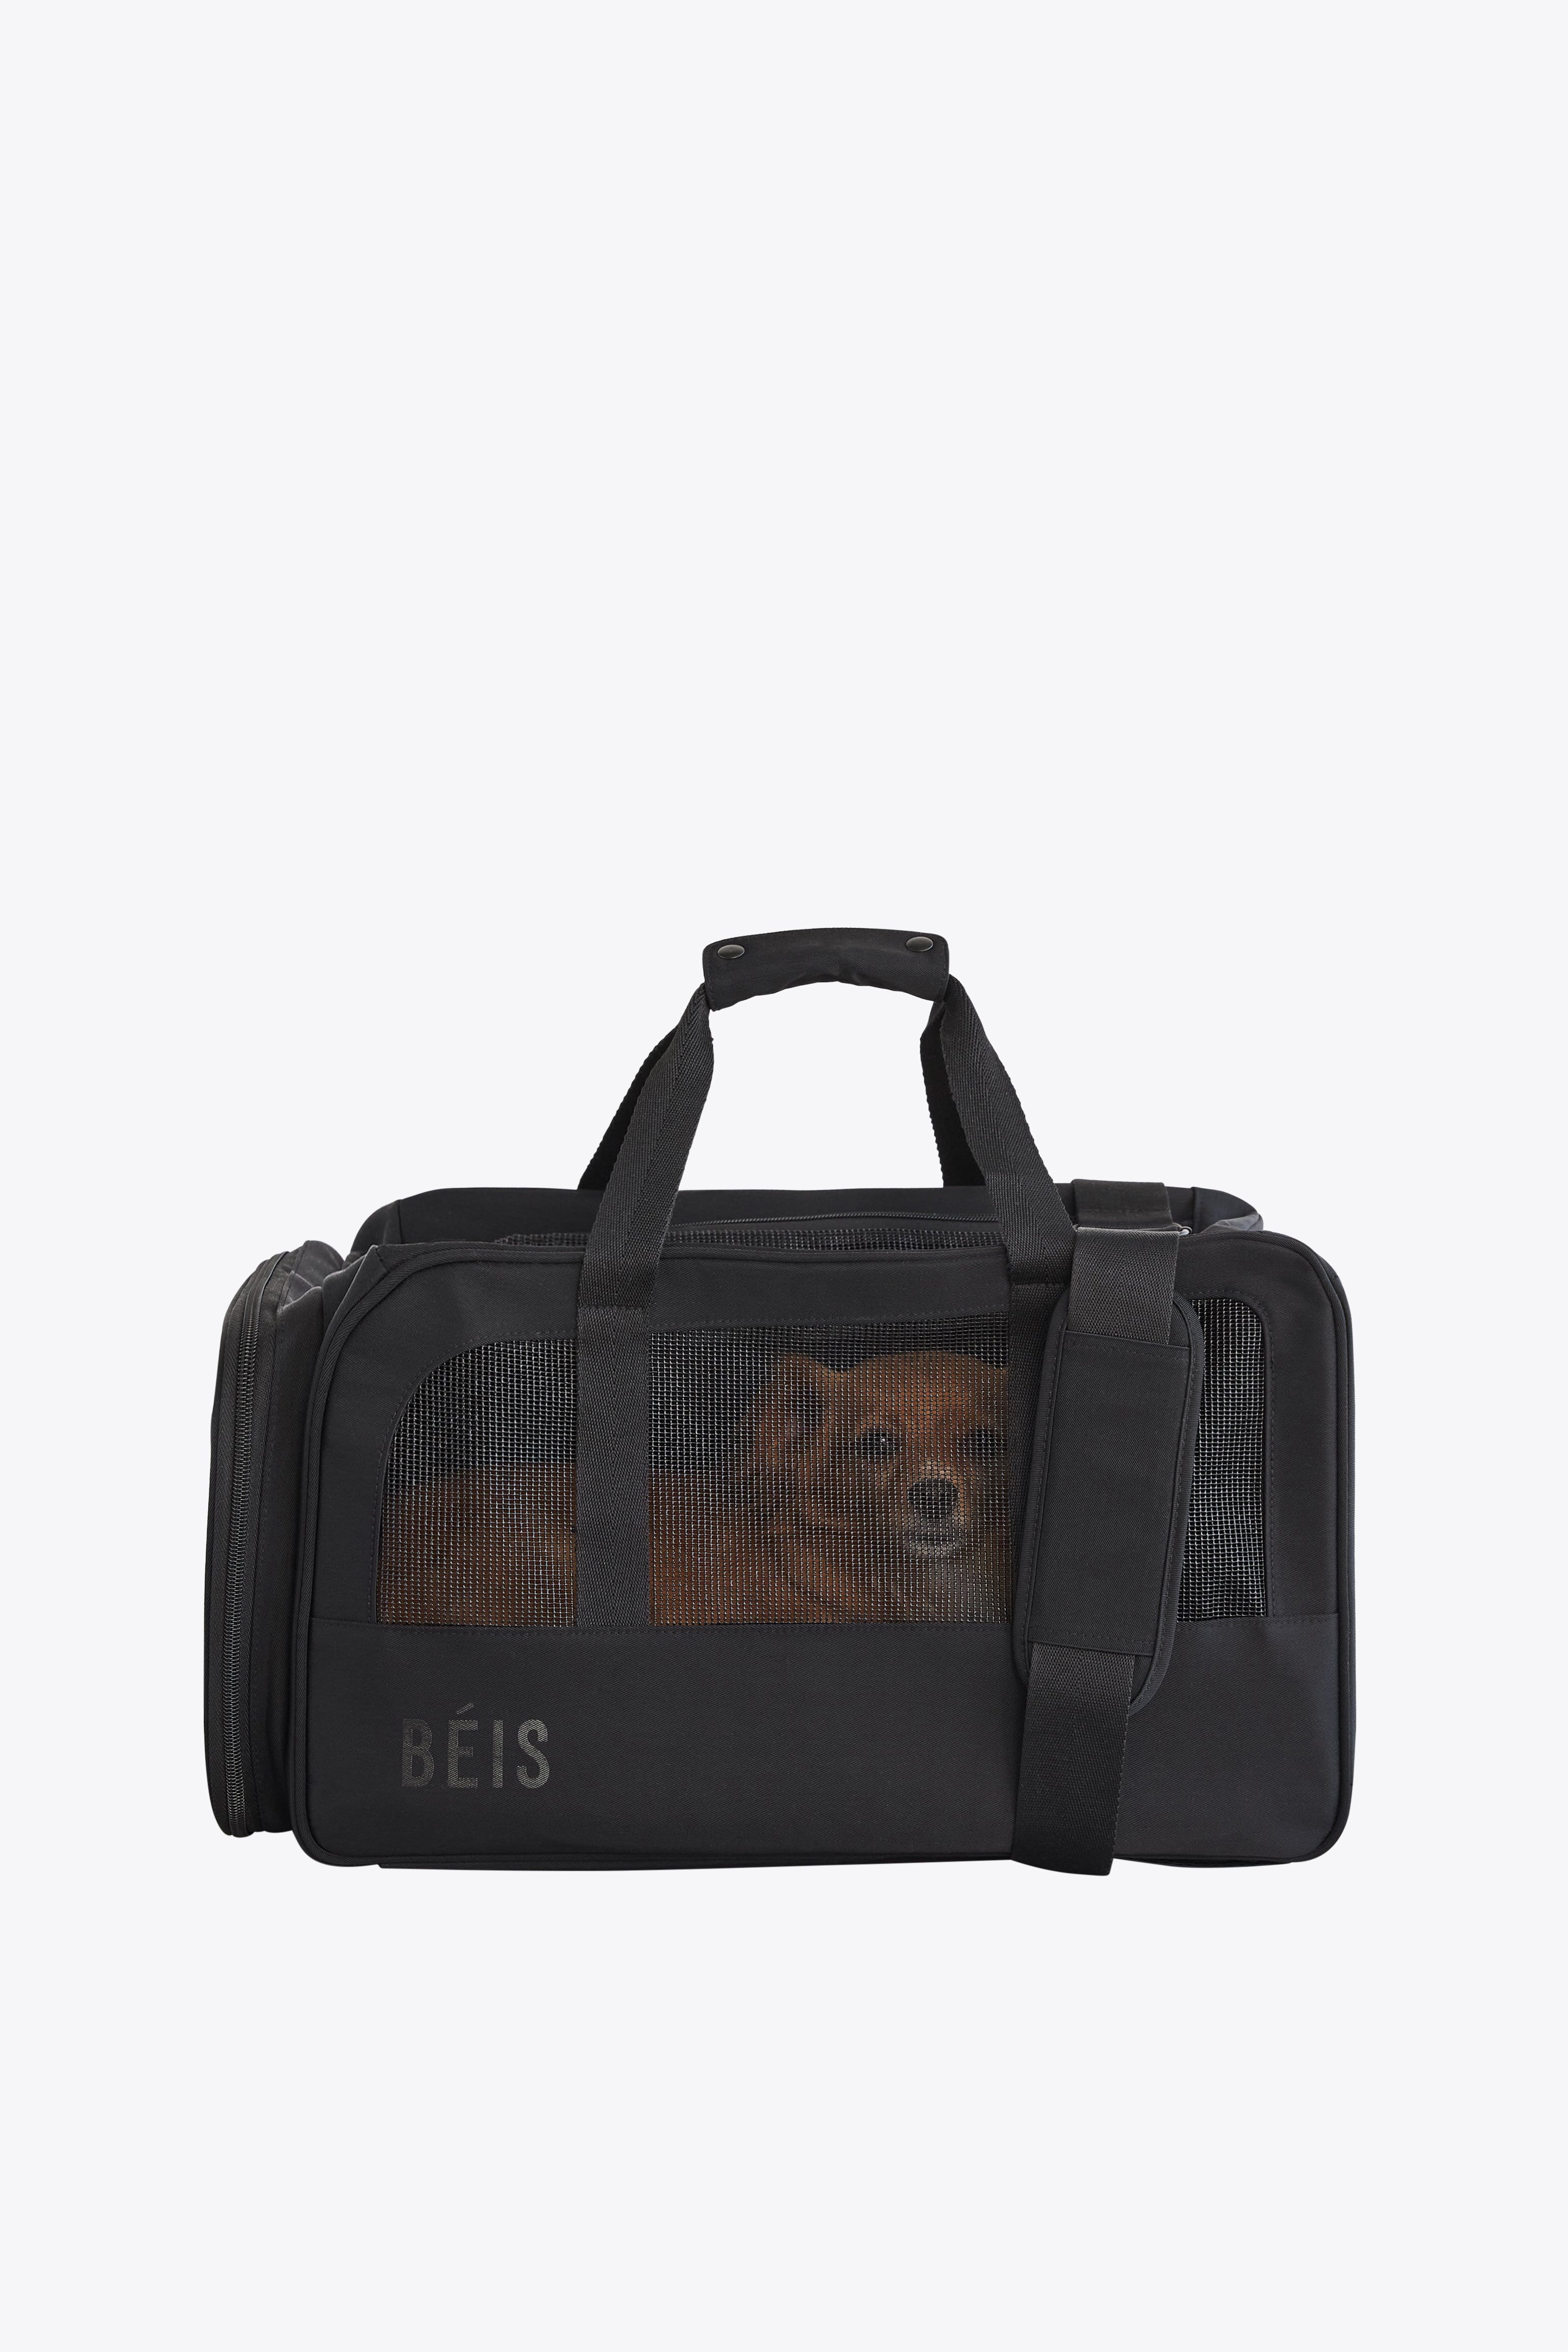 Jet Set Travel Large Logo Tote Bag | Michael Kors